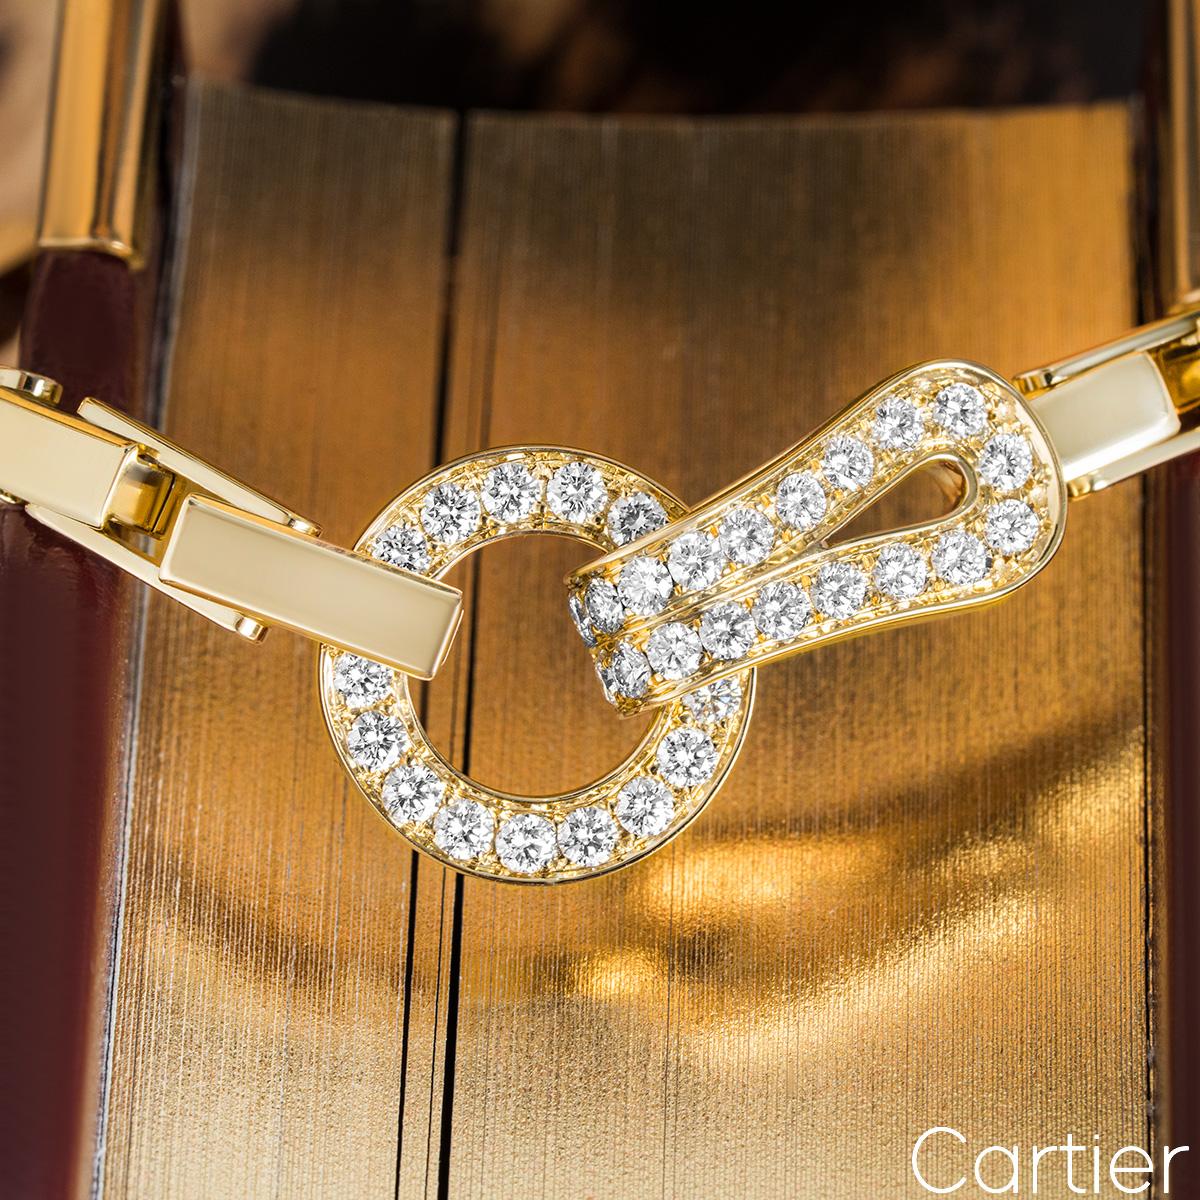 Cartier Yellow Gold Diamond Agrafe Bracelet 3